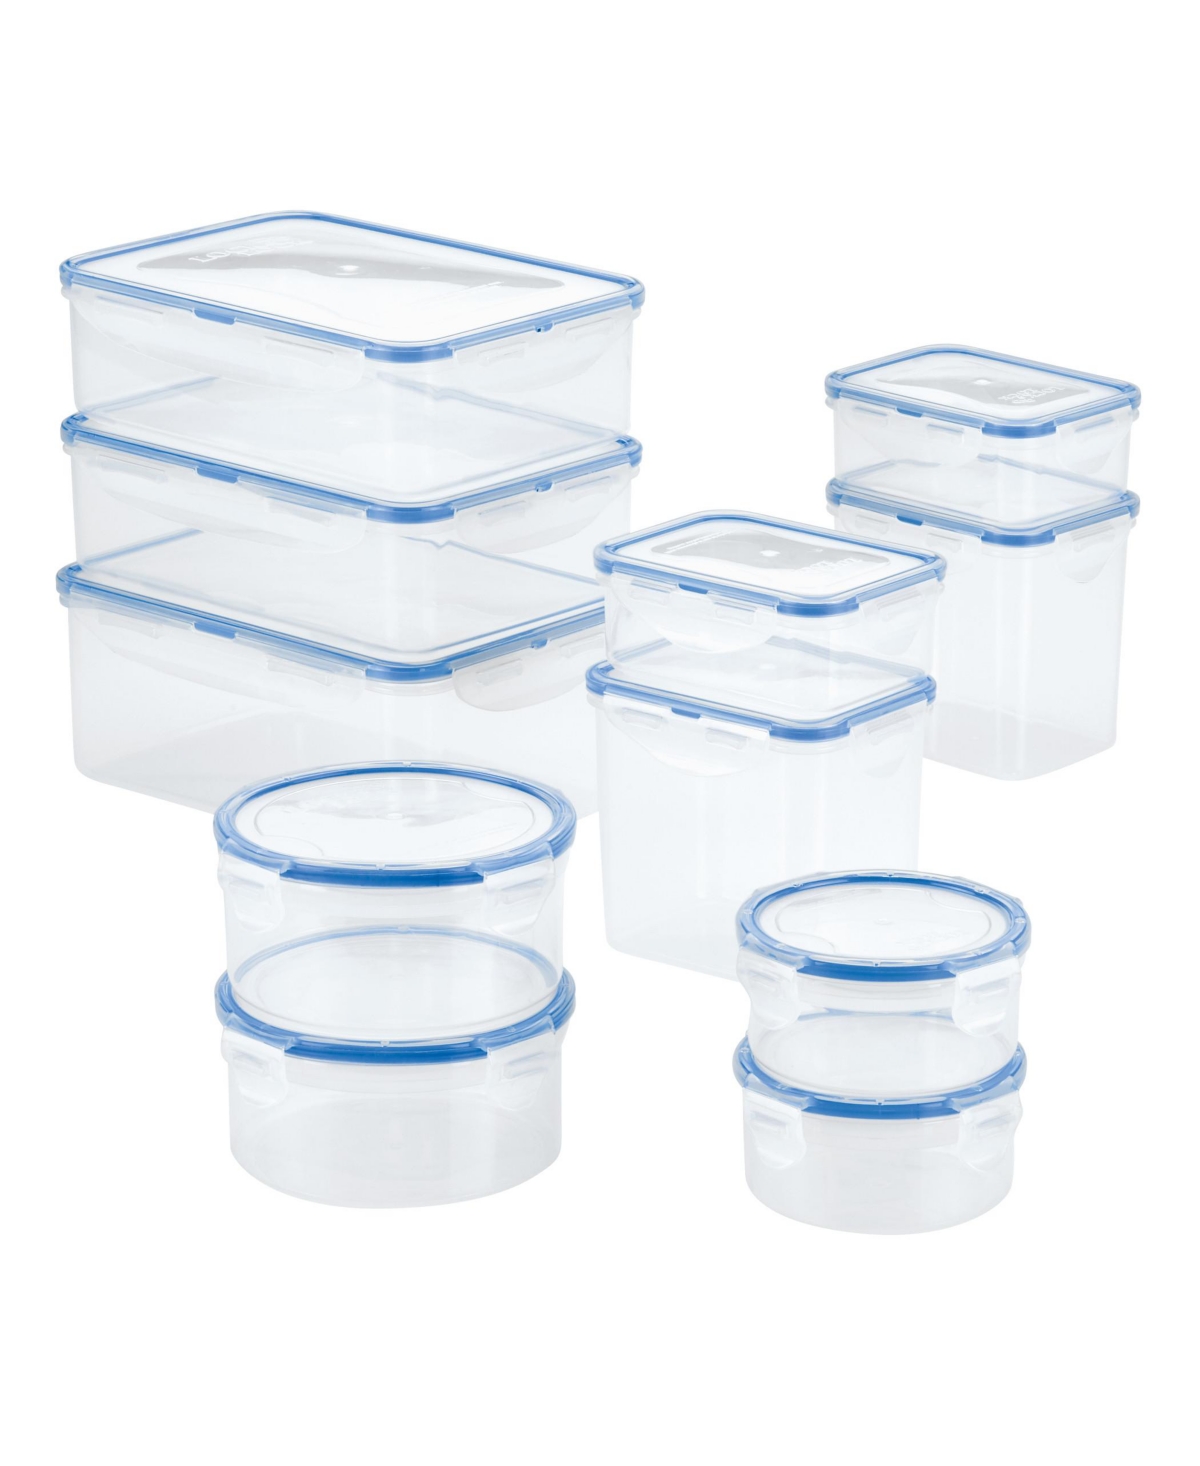 Easy Essentials 22-Pc. Food Storage Container Set - Blue